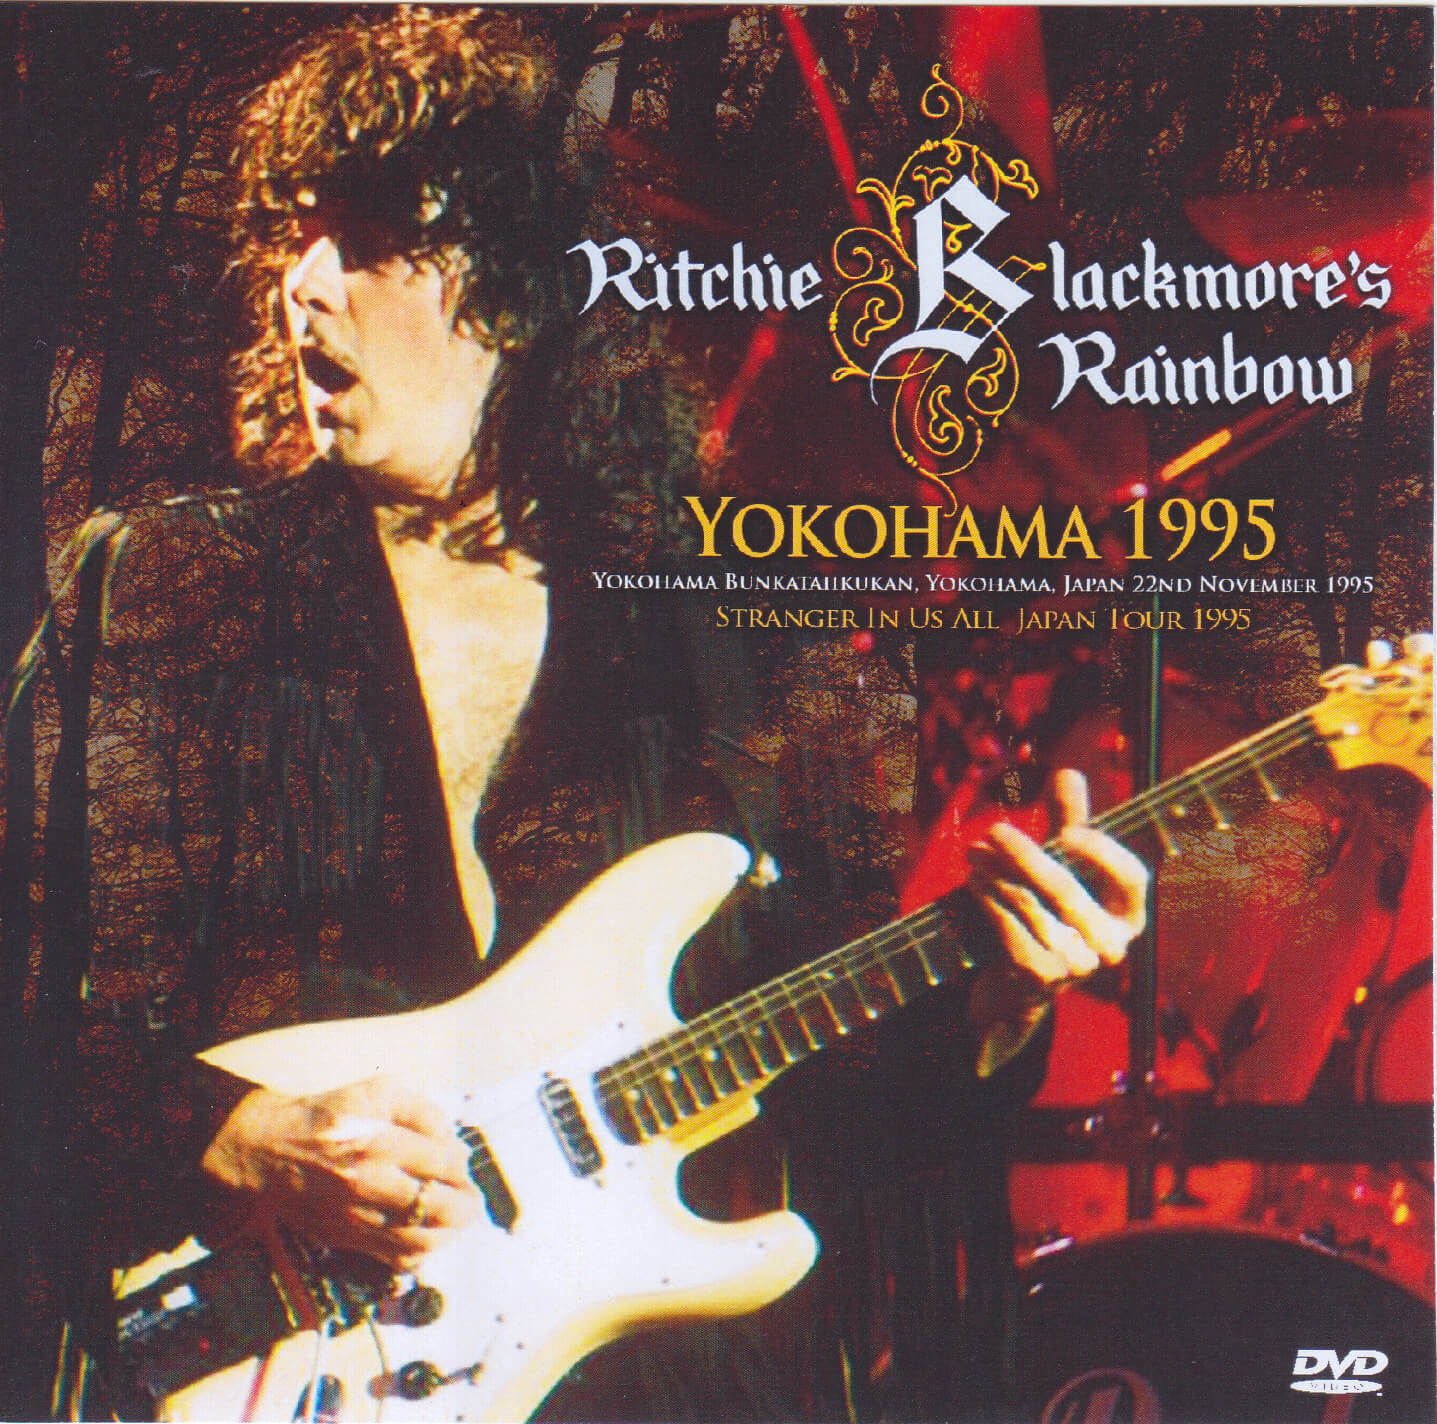 Ritchie Blackmore's Rainbow / Nagoya 1995 Dat Master / 2CD+1Bonus